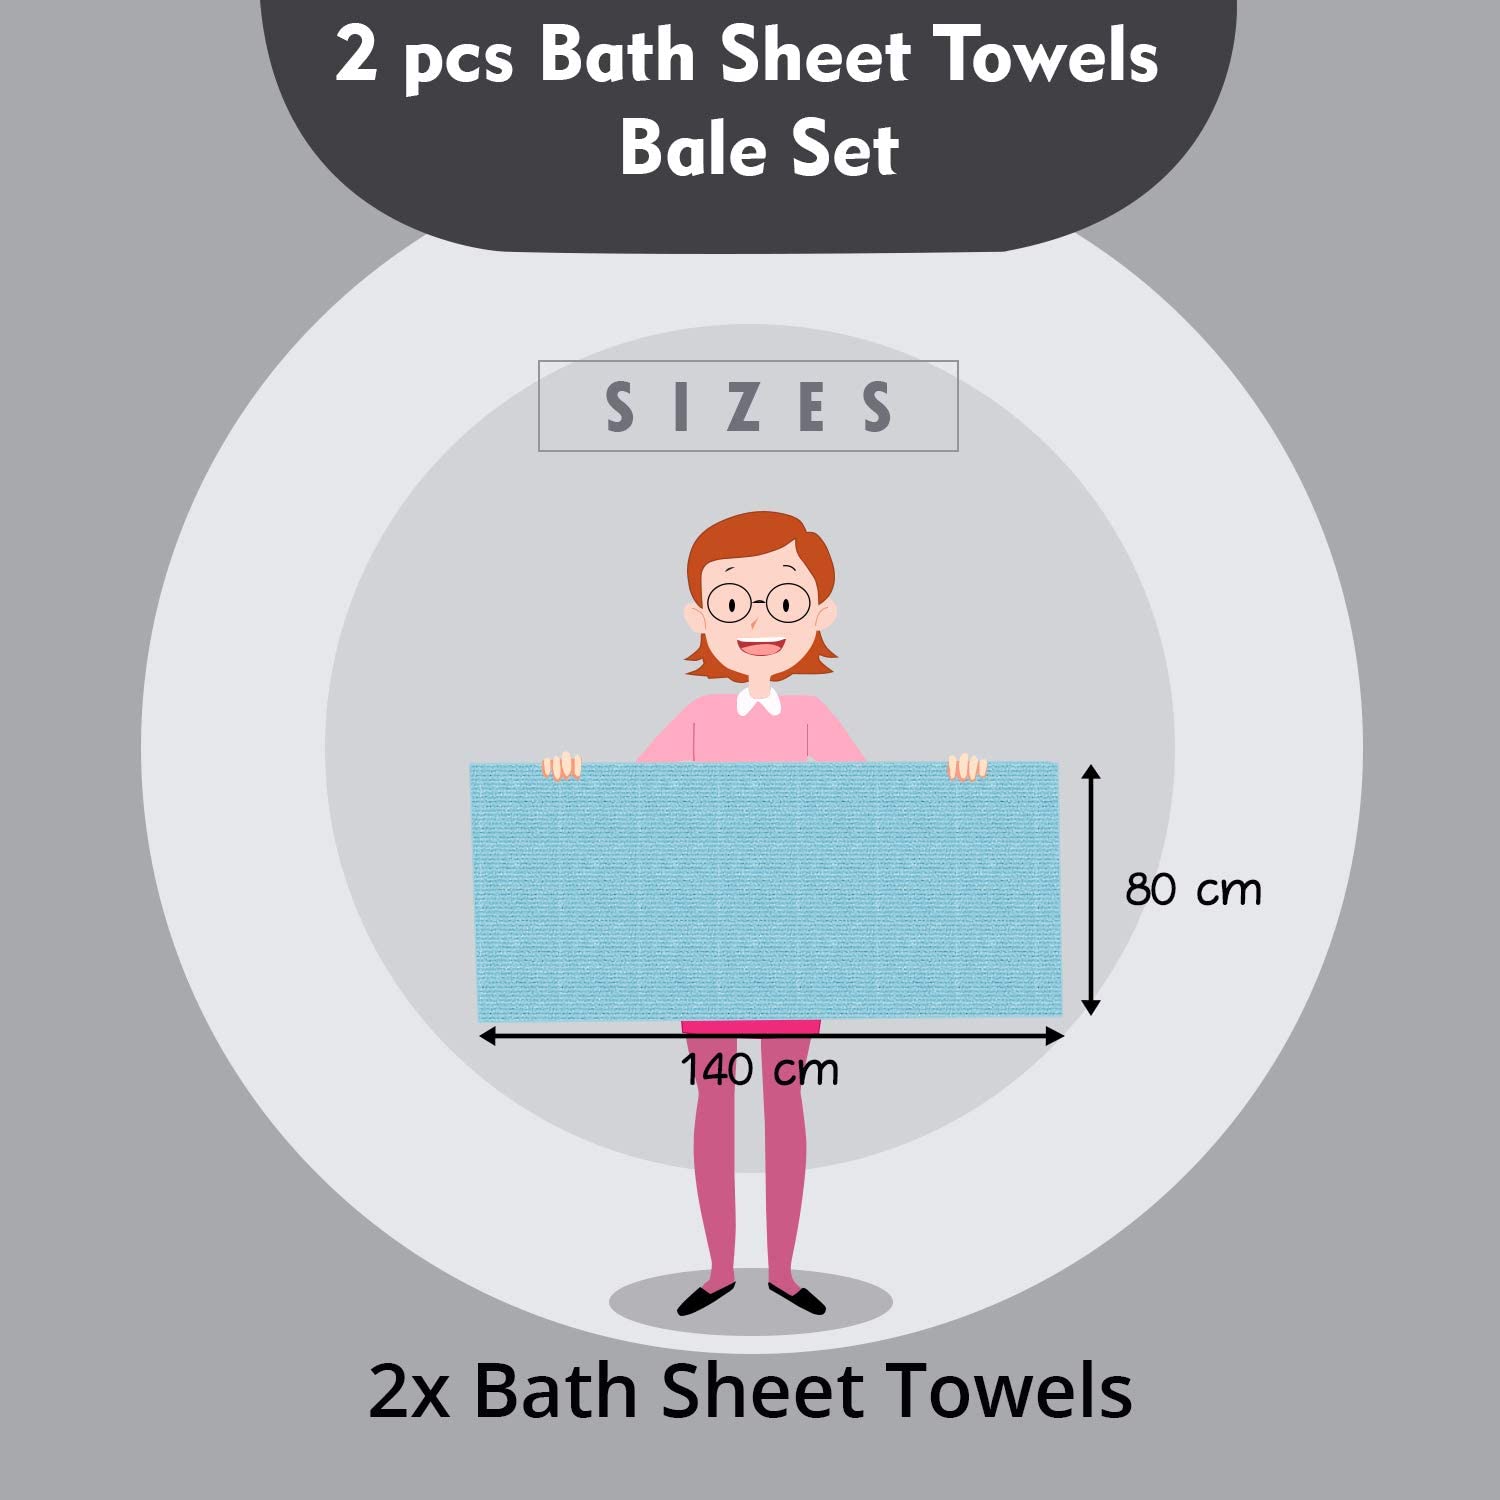 2 Pcs 100 % Cotton Premium Bath Sheet Towel Bale Set White Plain